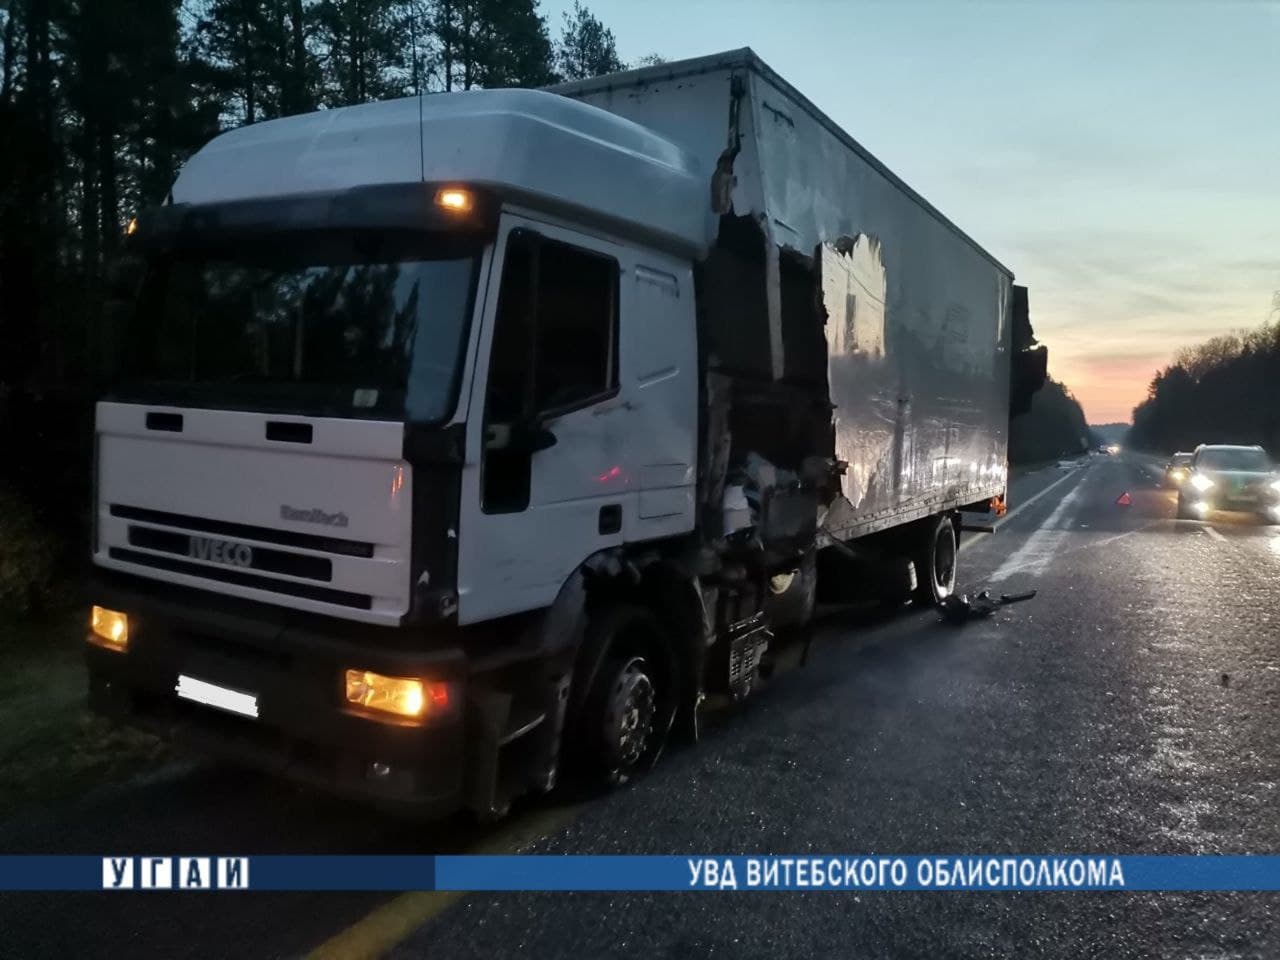 Два грузовика столкнулись на трассе Минск-Витебск